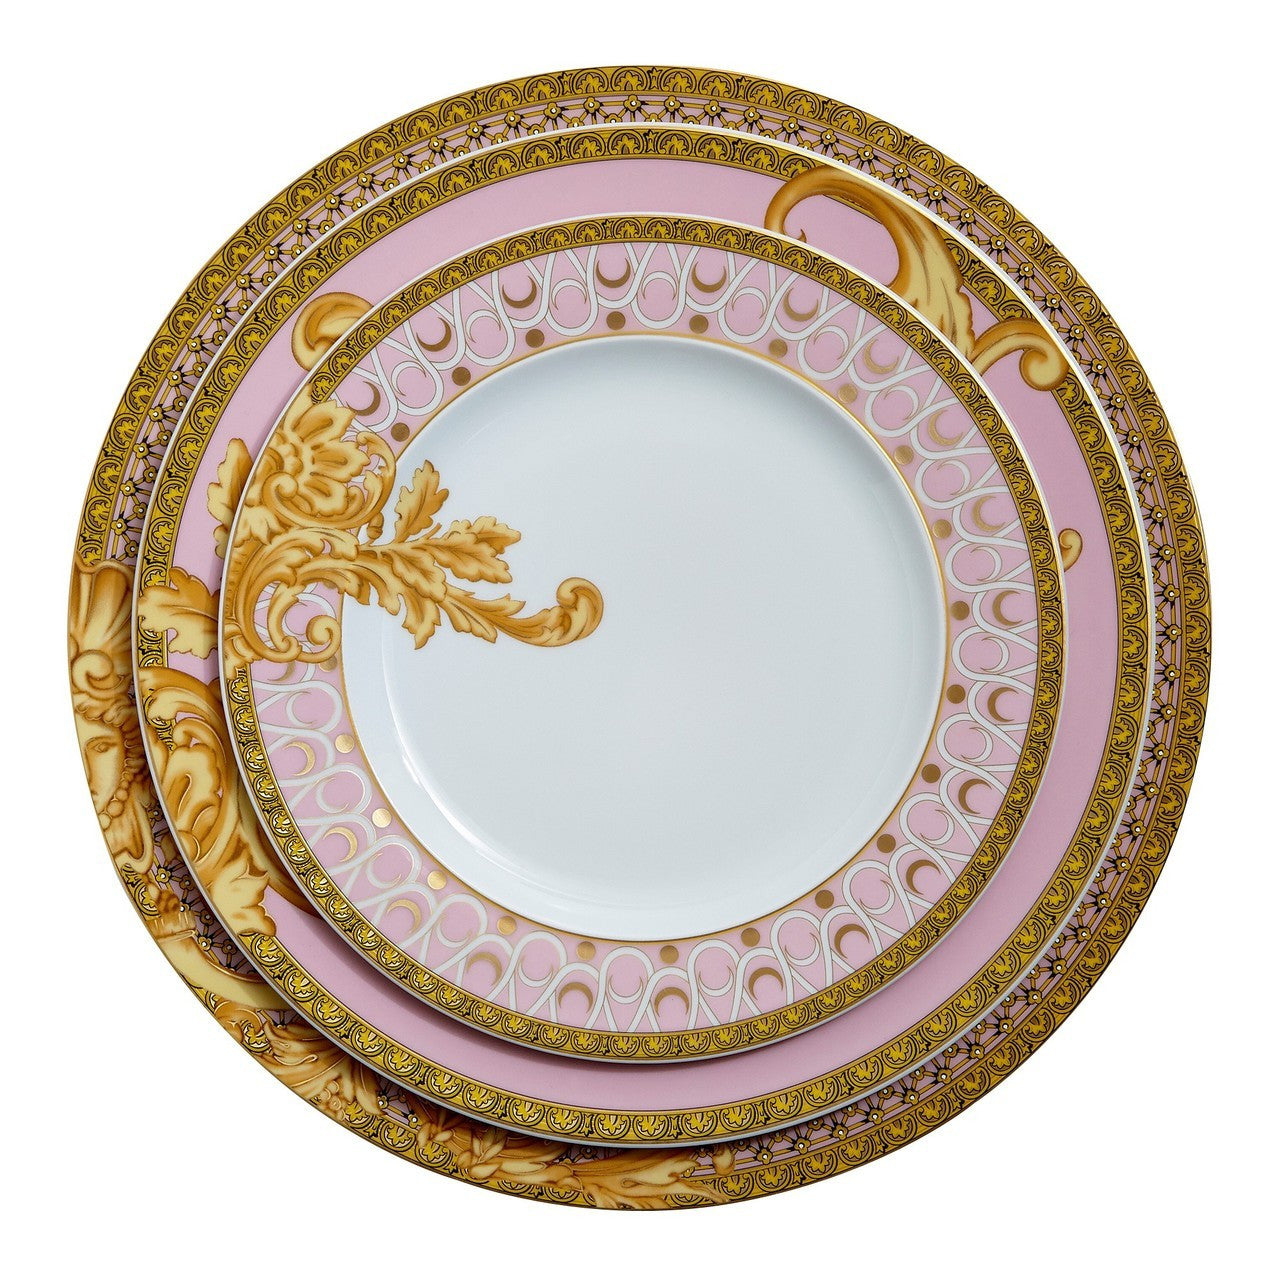 Byzantine Dreams Dinner Plate - RSVP Style